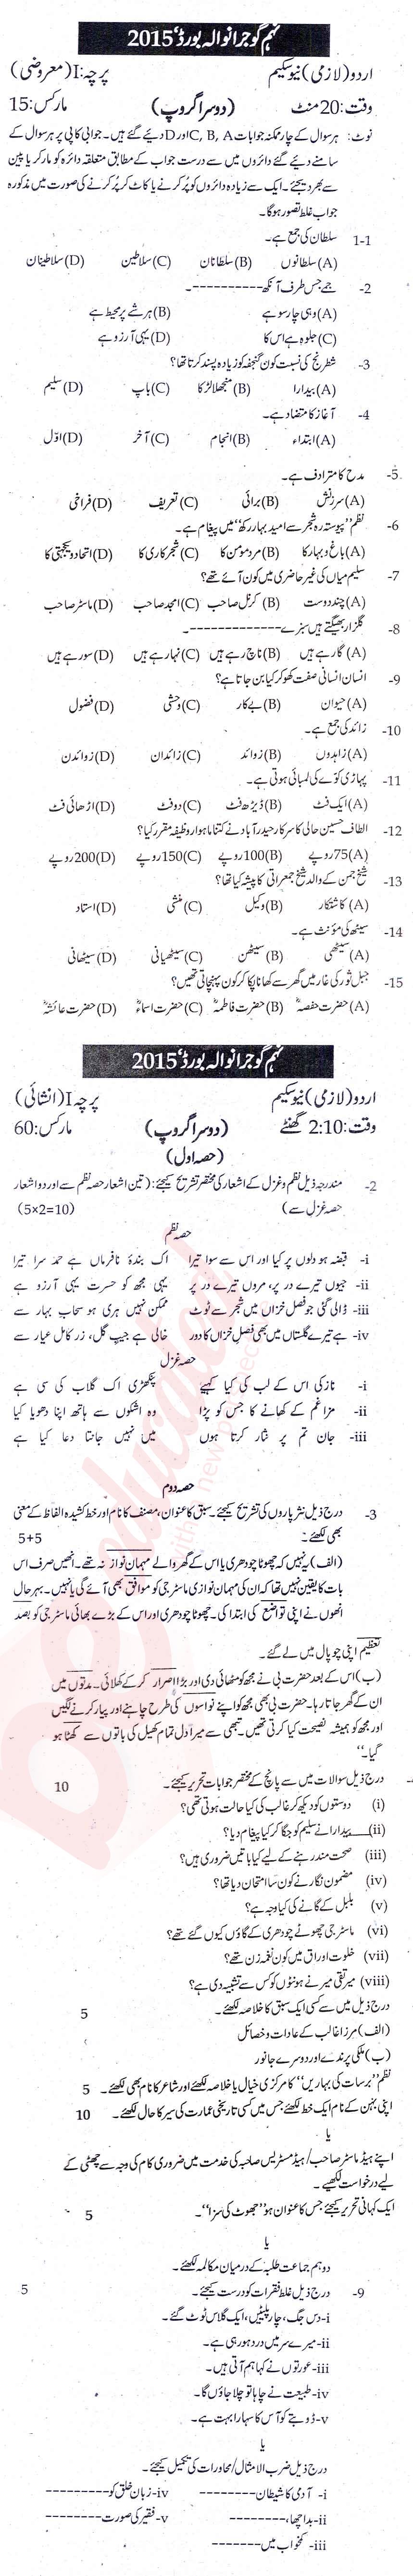 Urdu 9th class Past Paper Group 2 BISE Gujranwala 2015